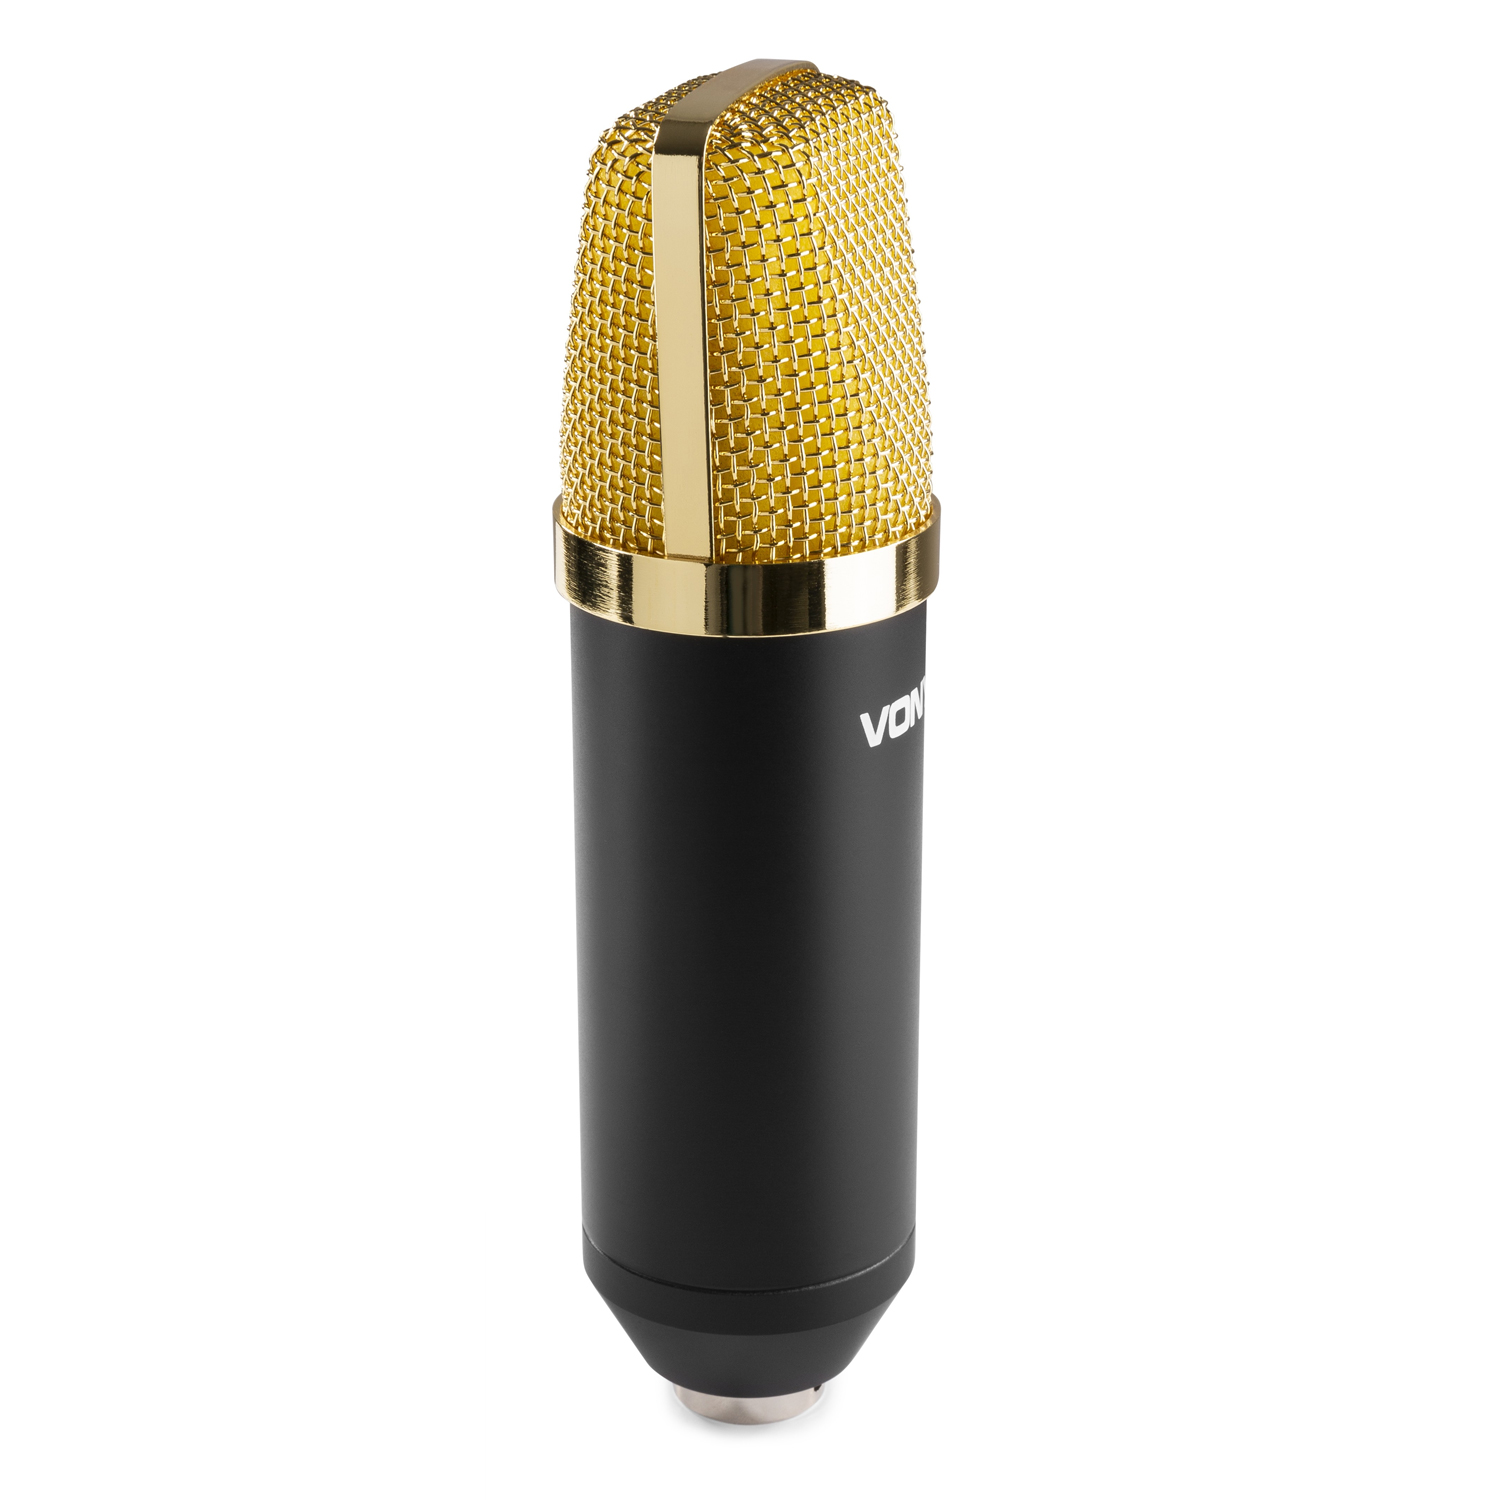 VONYX CMS400B Studio Set με Μικρόφωνο Phantom, Βάση στήριξης και Anti-Pop φίλτρο (Gold) 173.504 --